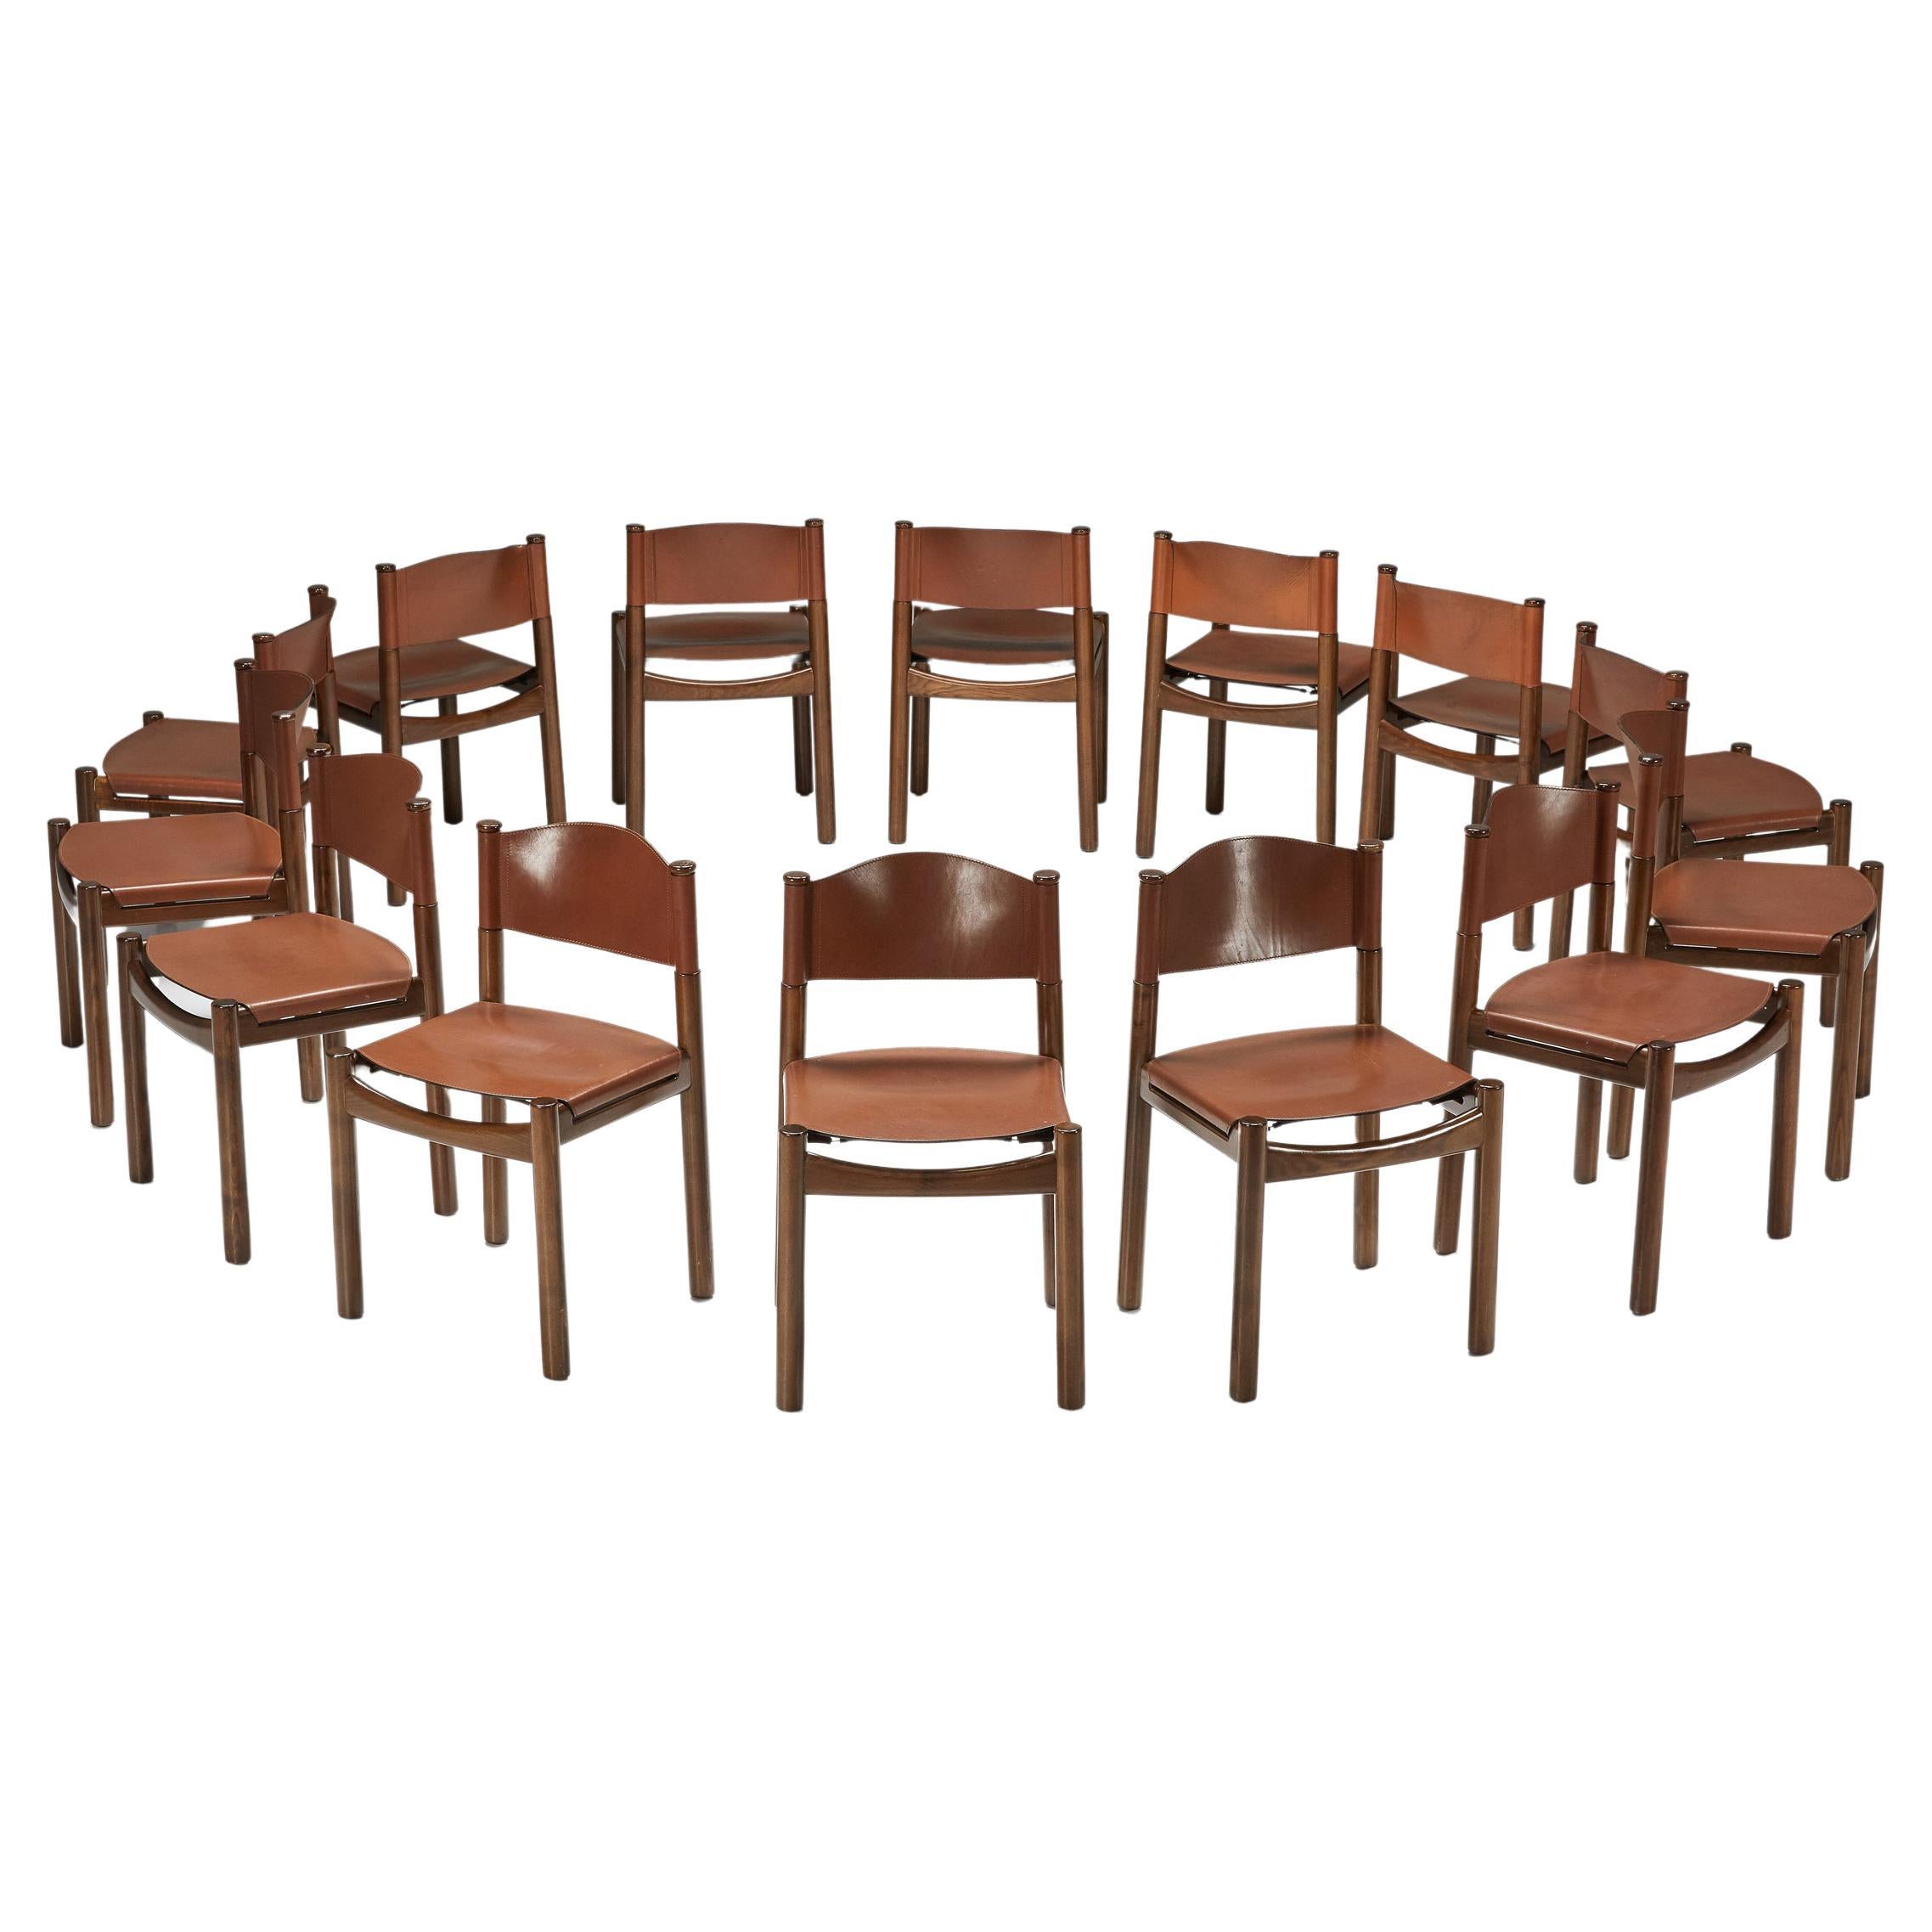 Scarpa Style Walnut & Leather Dining Chairs, Italian design, rustic twist